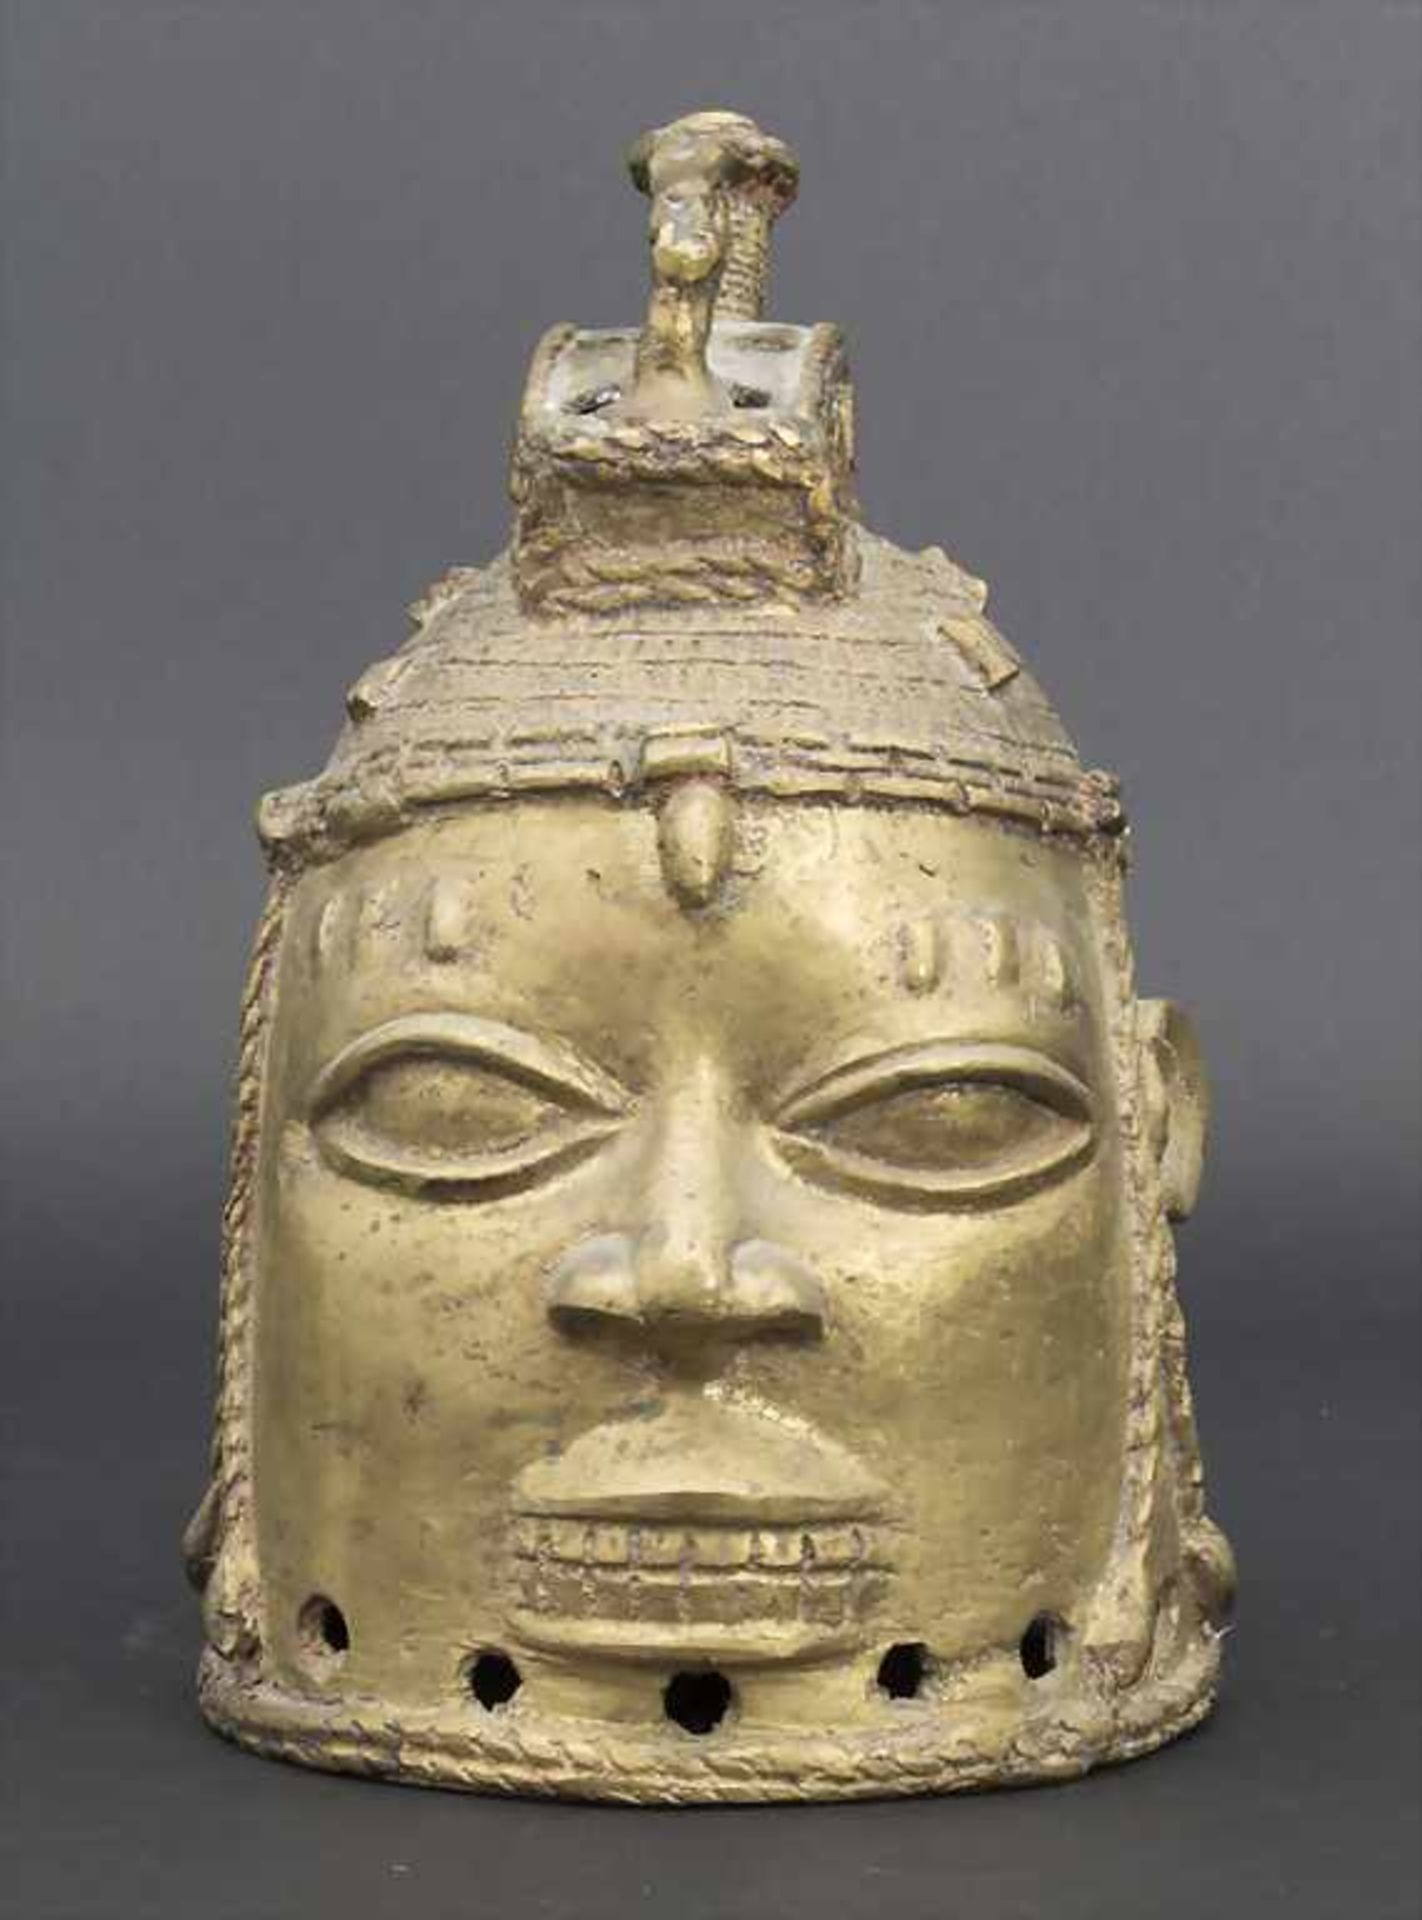 Benin Kopf eines Häuptlings, WestafrikaMaterial: Bronze,Maße: 24 cm, Zustand: Gussfehler- - -20.00 %